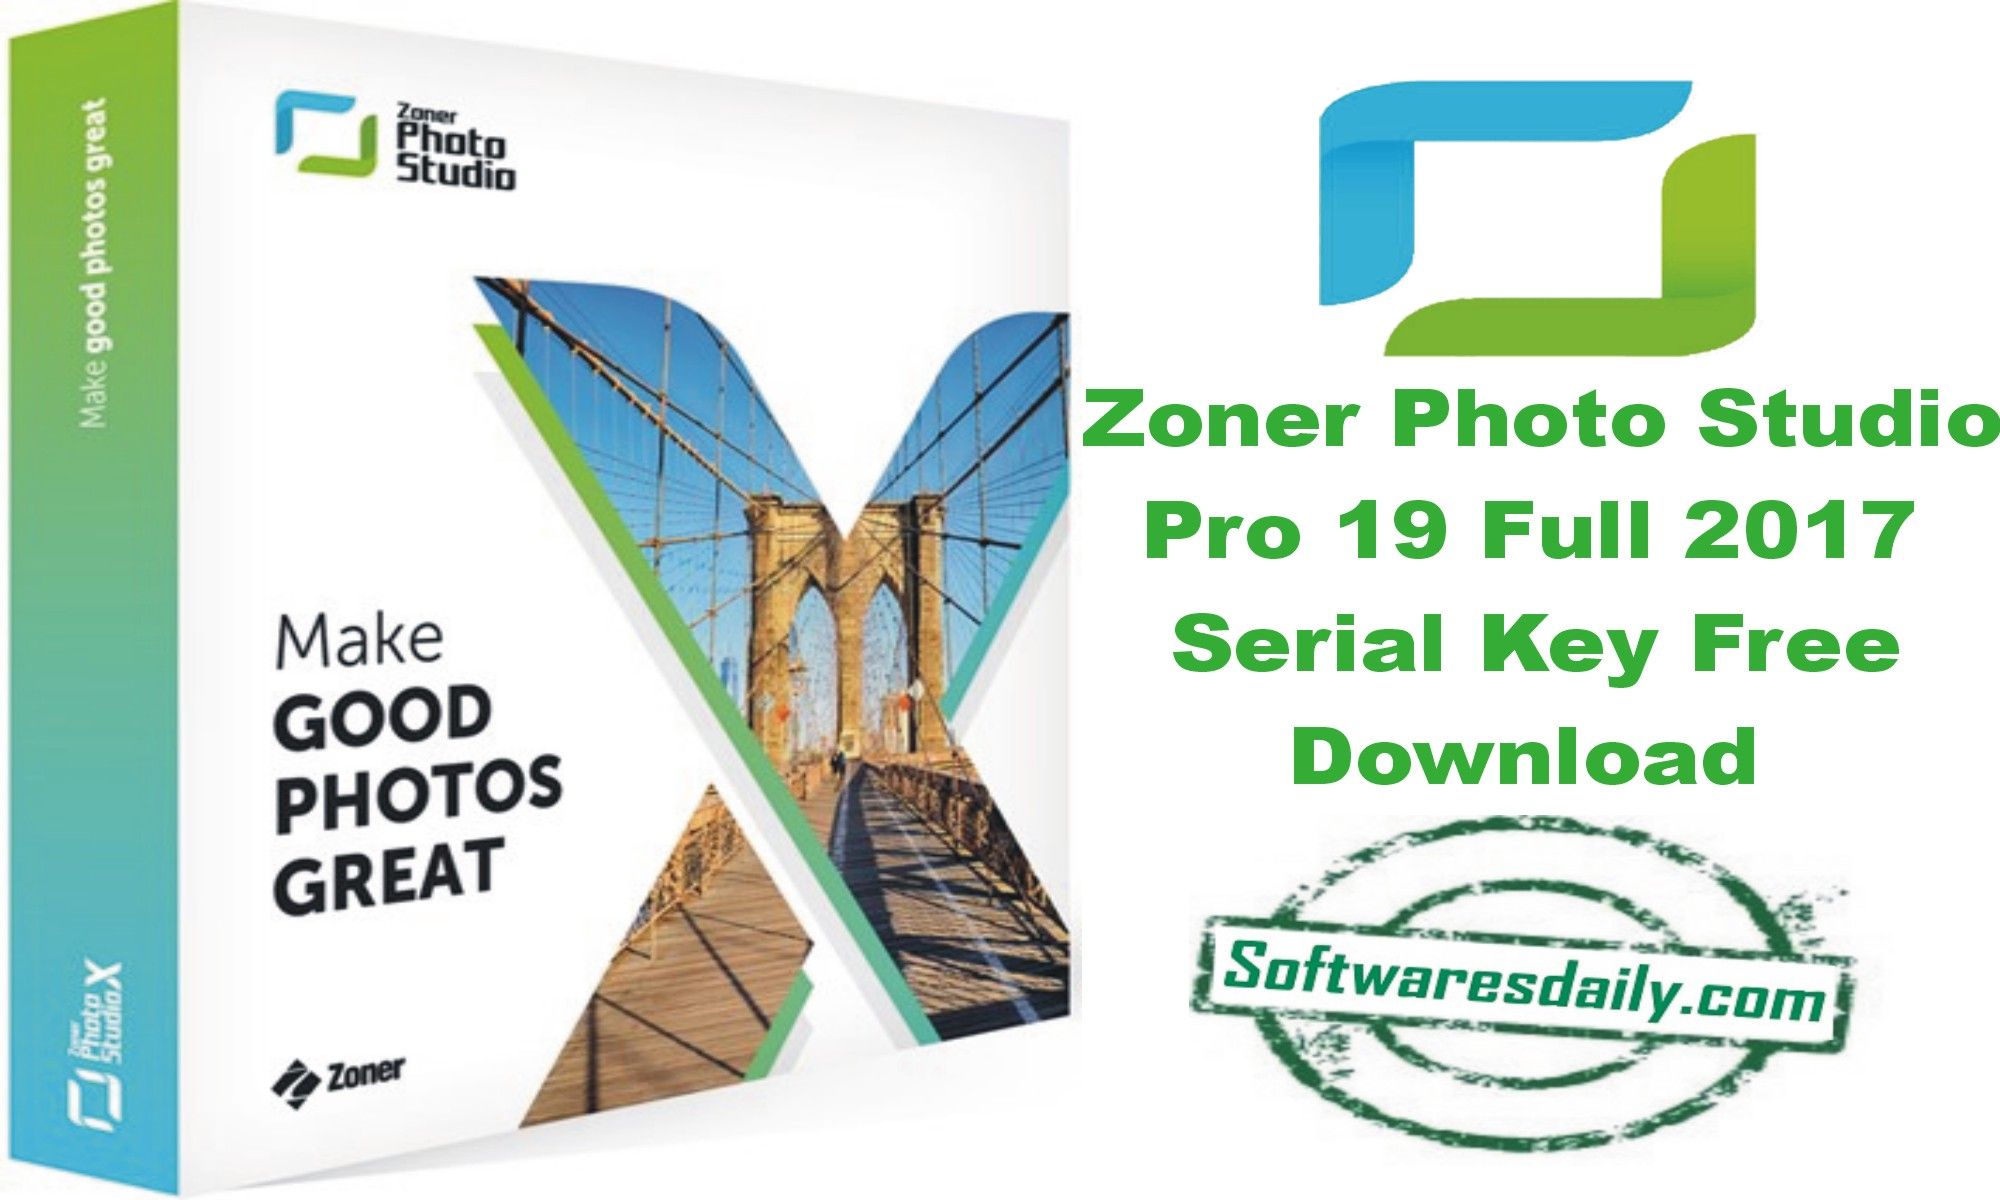 zoner photo studio 15 serial key free download